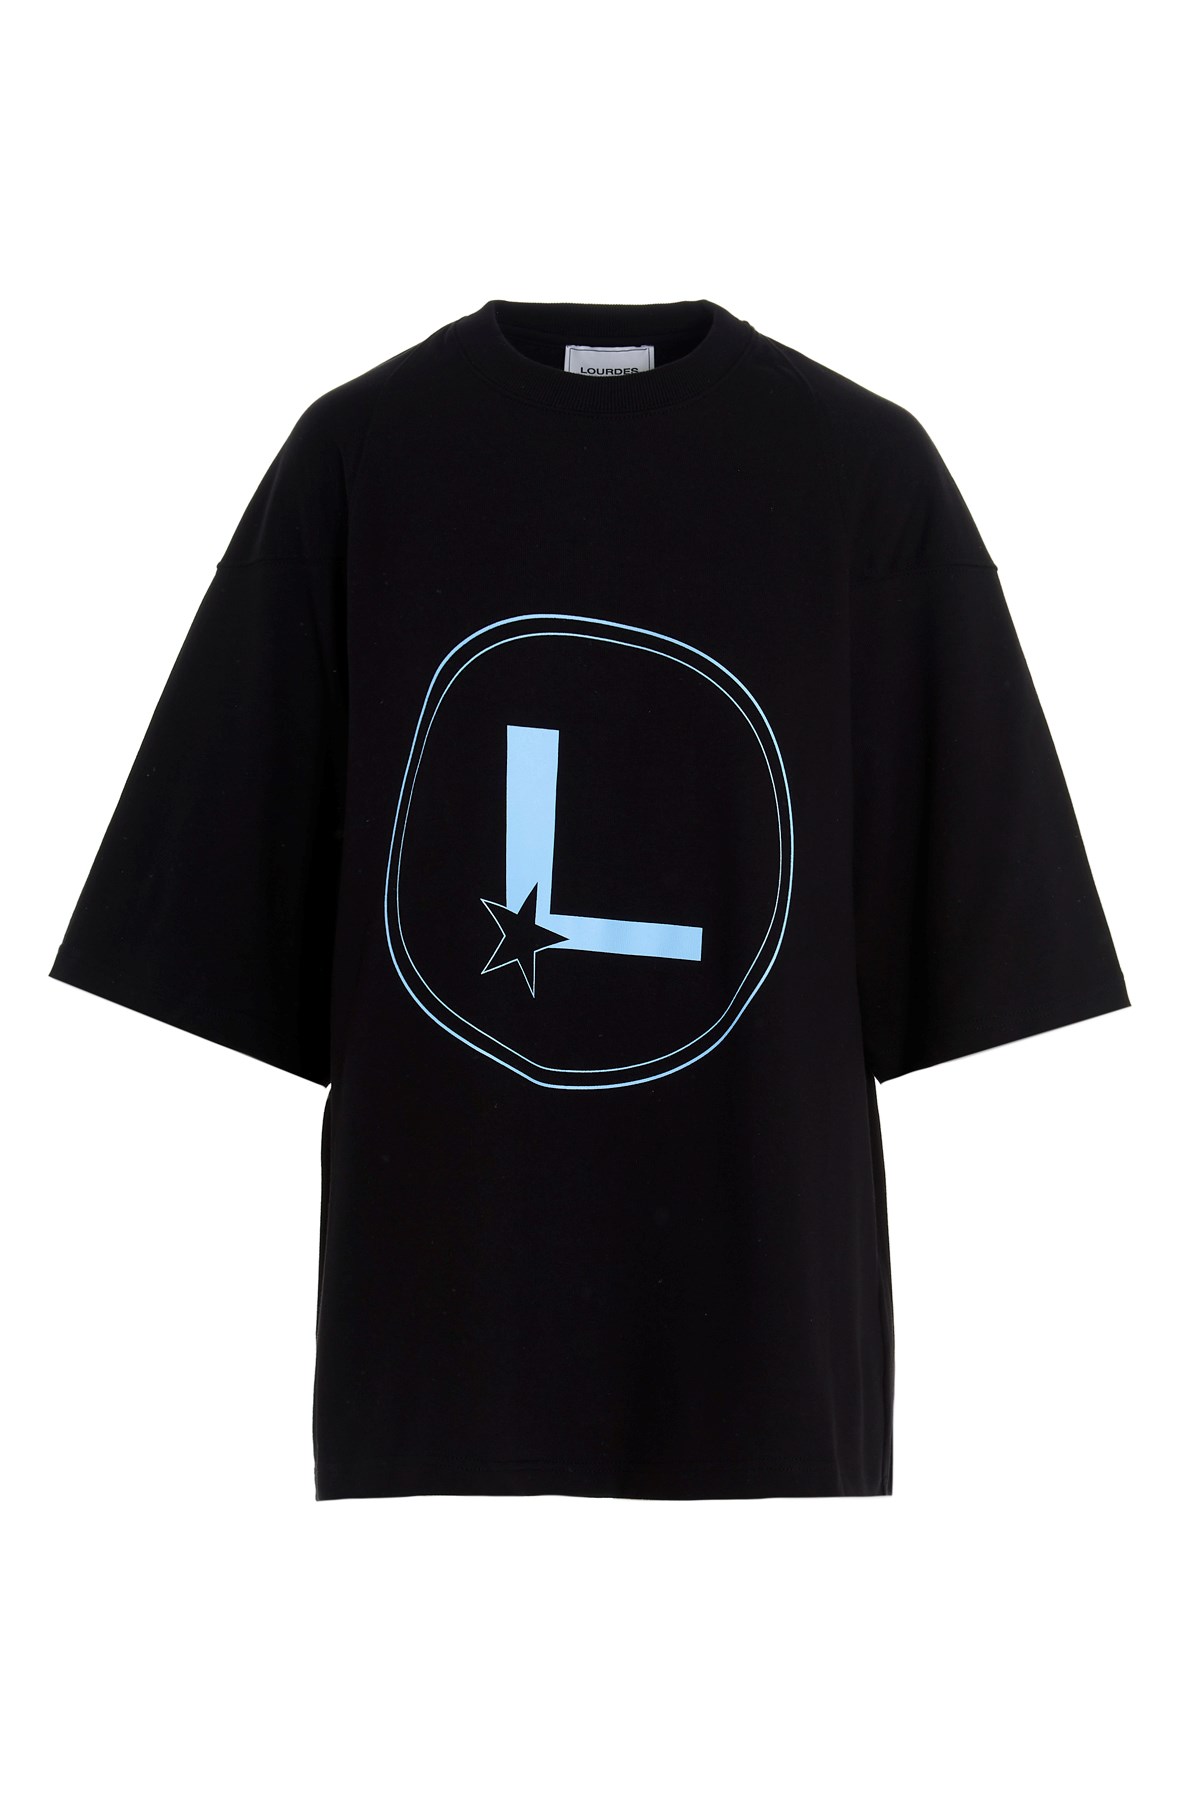 LOURDES NEW YORK Logo Printed T-Shirt